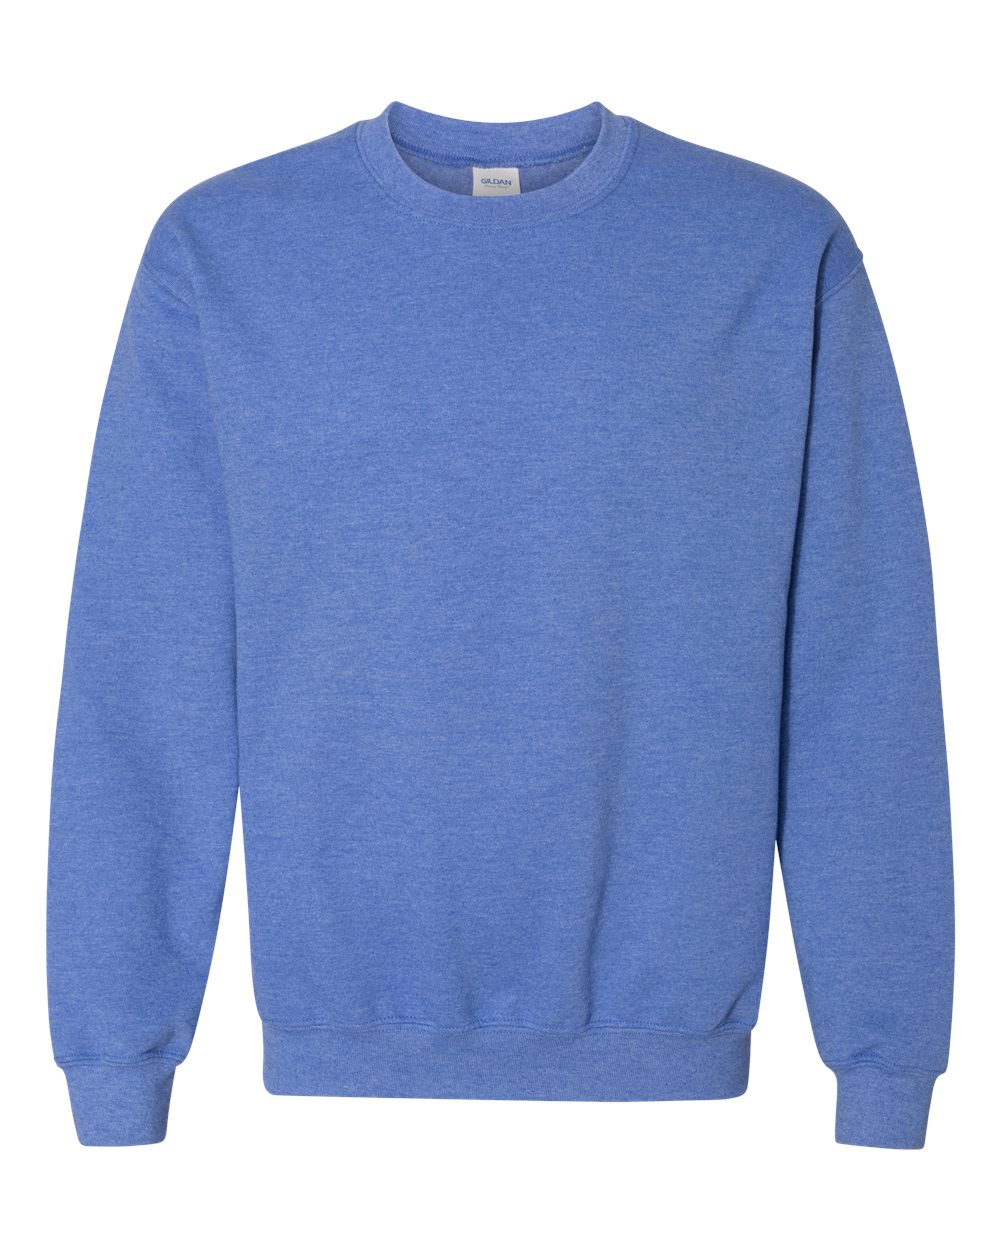 50/50 Youth Crewneck Sweatshirt, Color: Light Blue, Size: X-Large